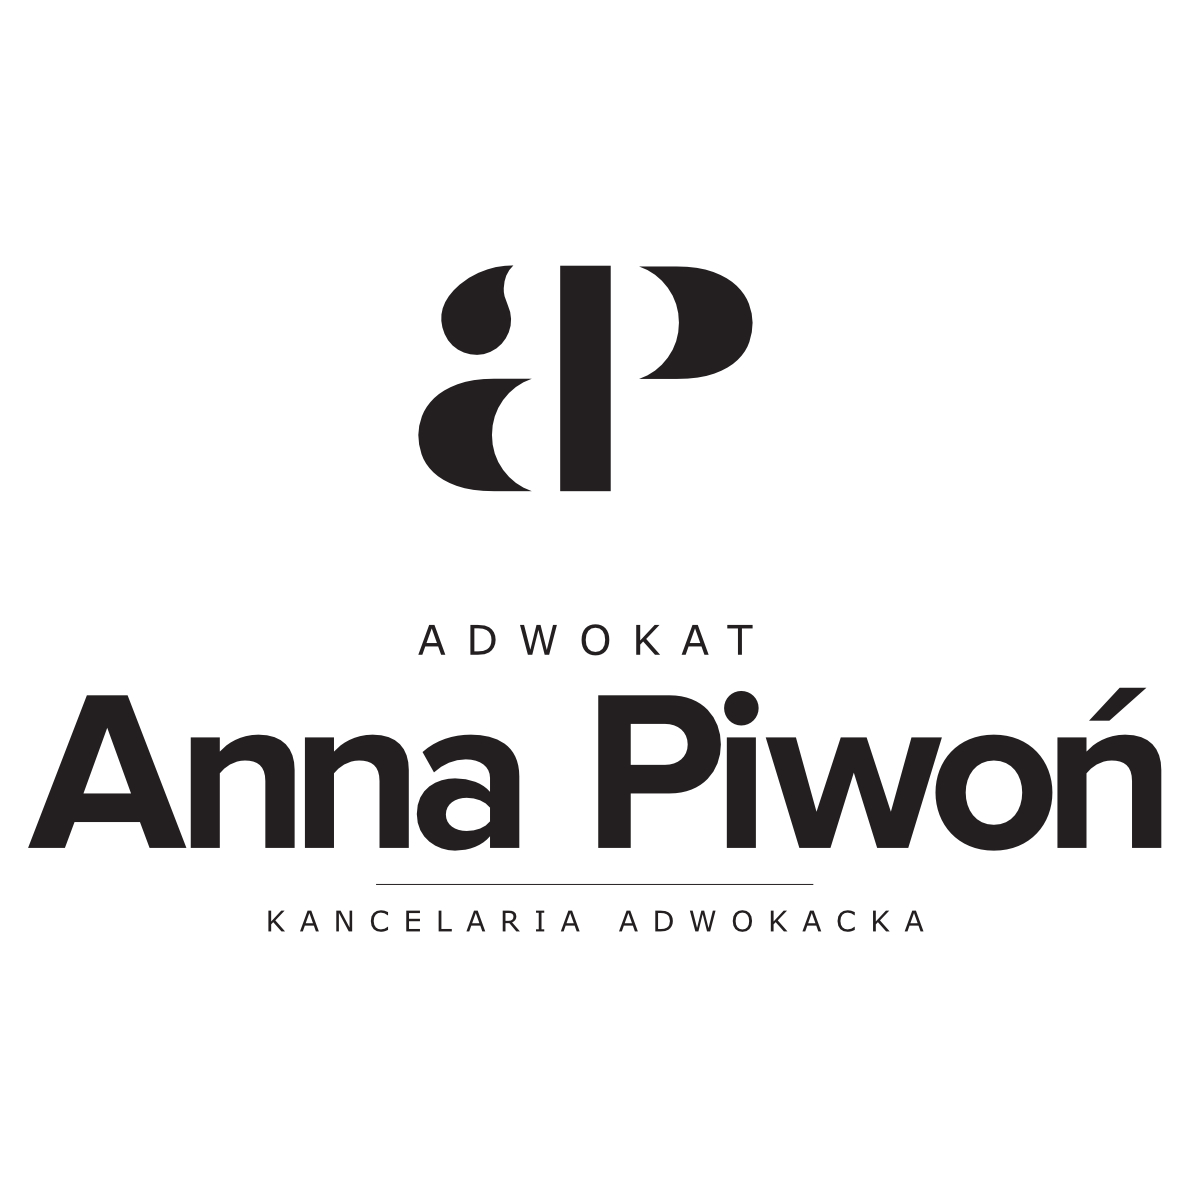 Kancelaria Adwokacka Adwokat Anna Piwoń